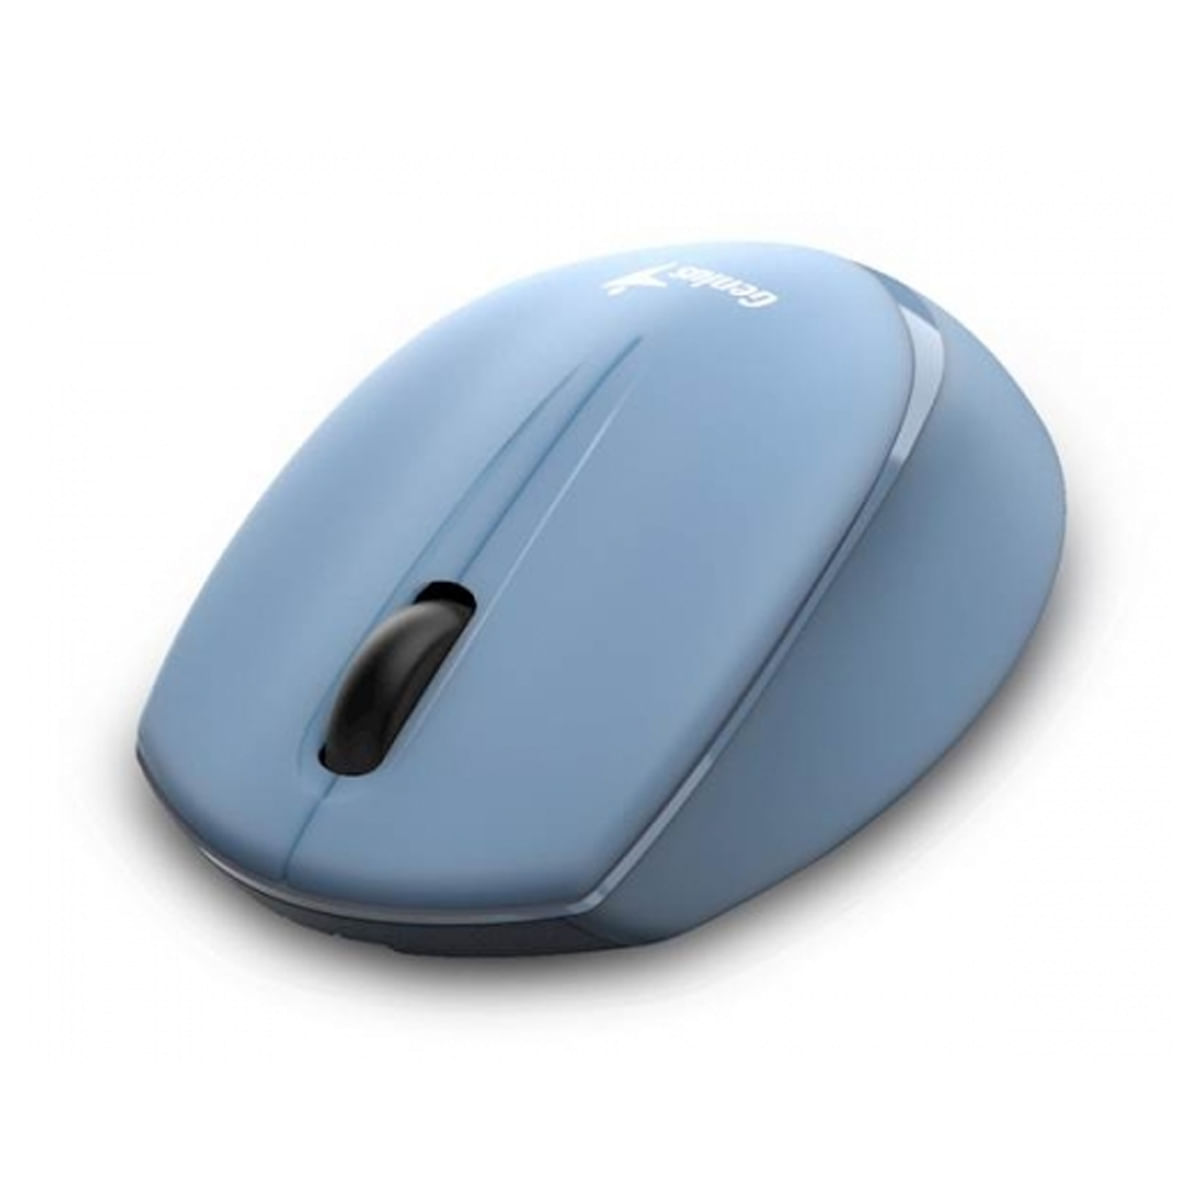 Mouse Genius Nx-7009 Wireless  Ergonomico Gris / azul